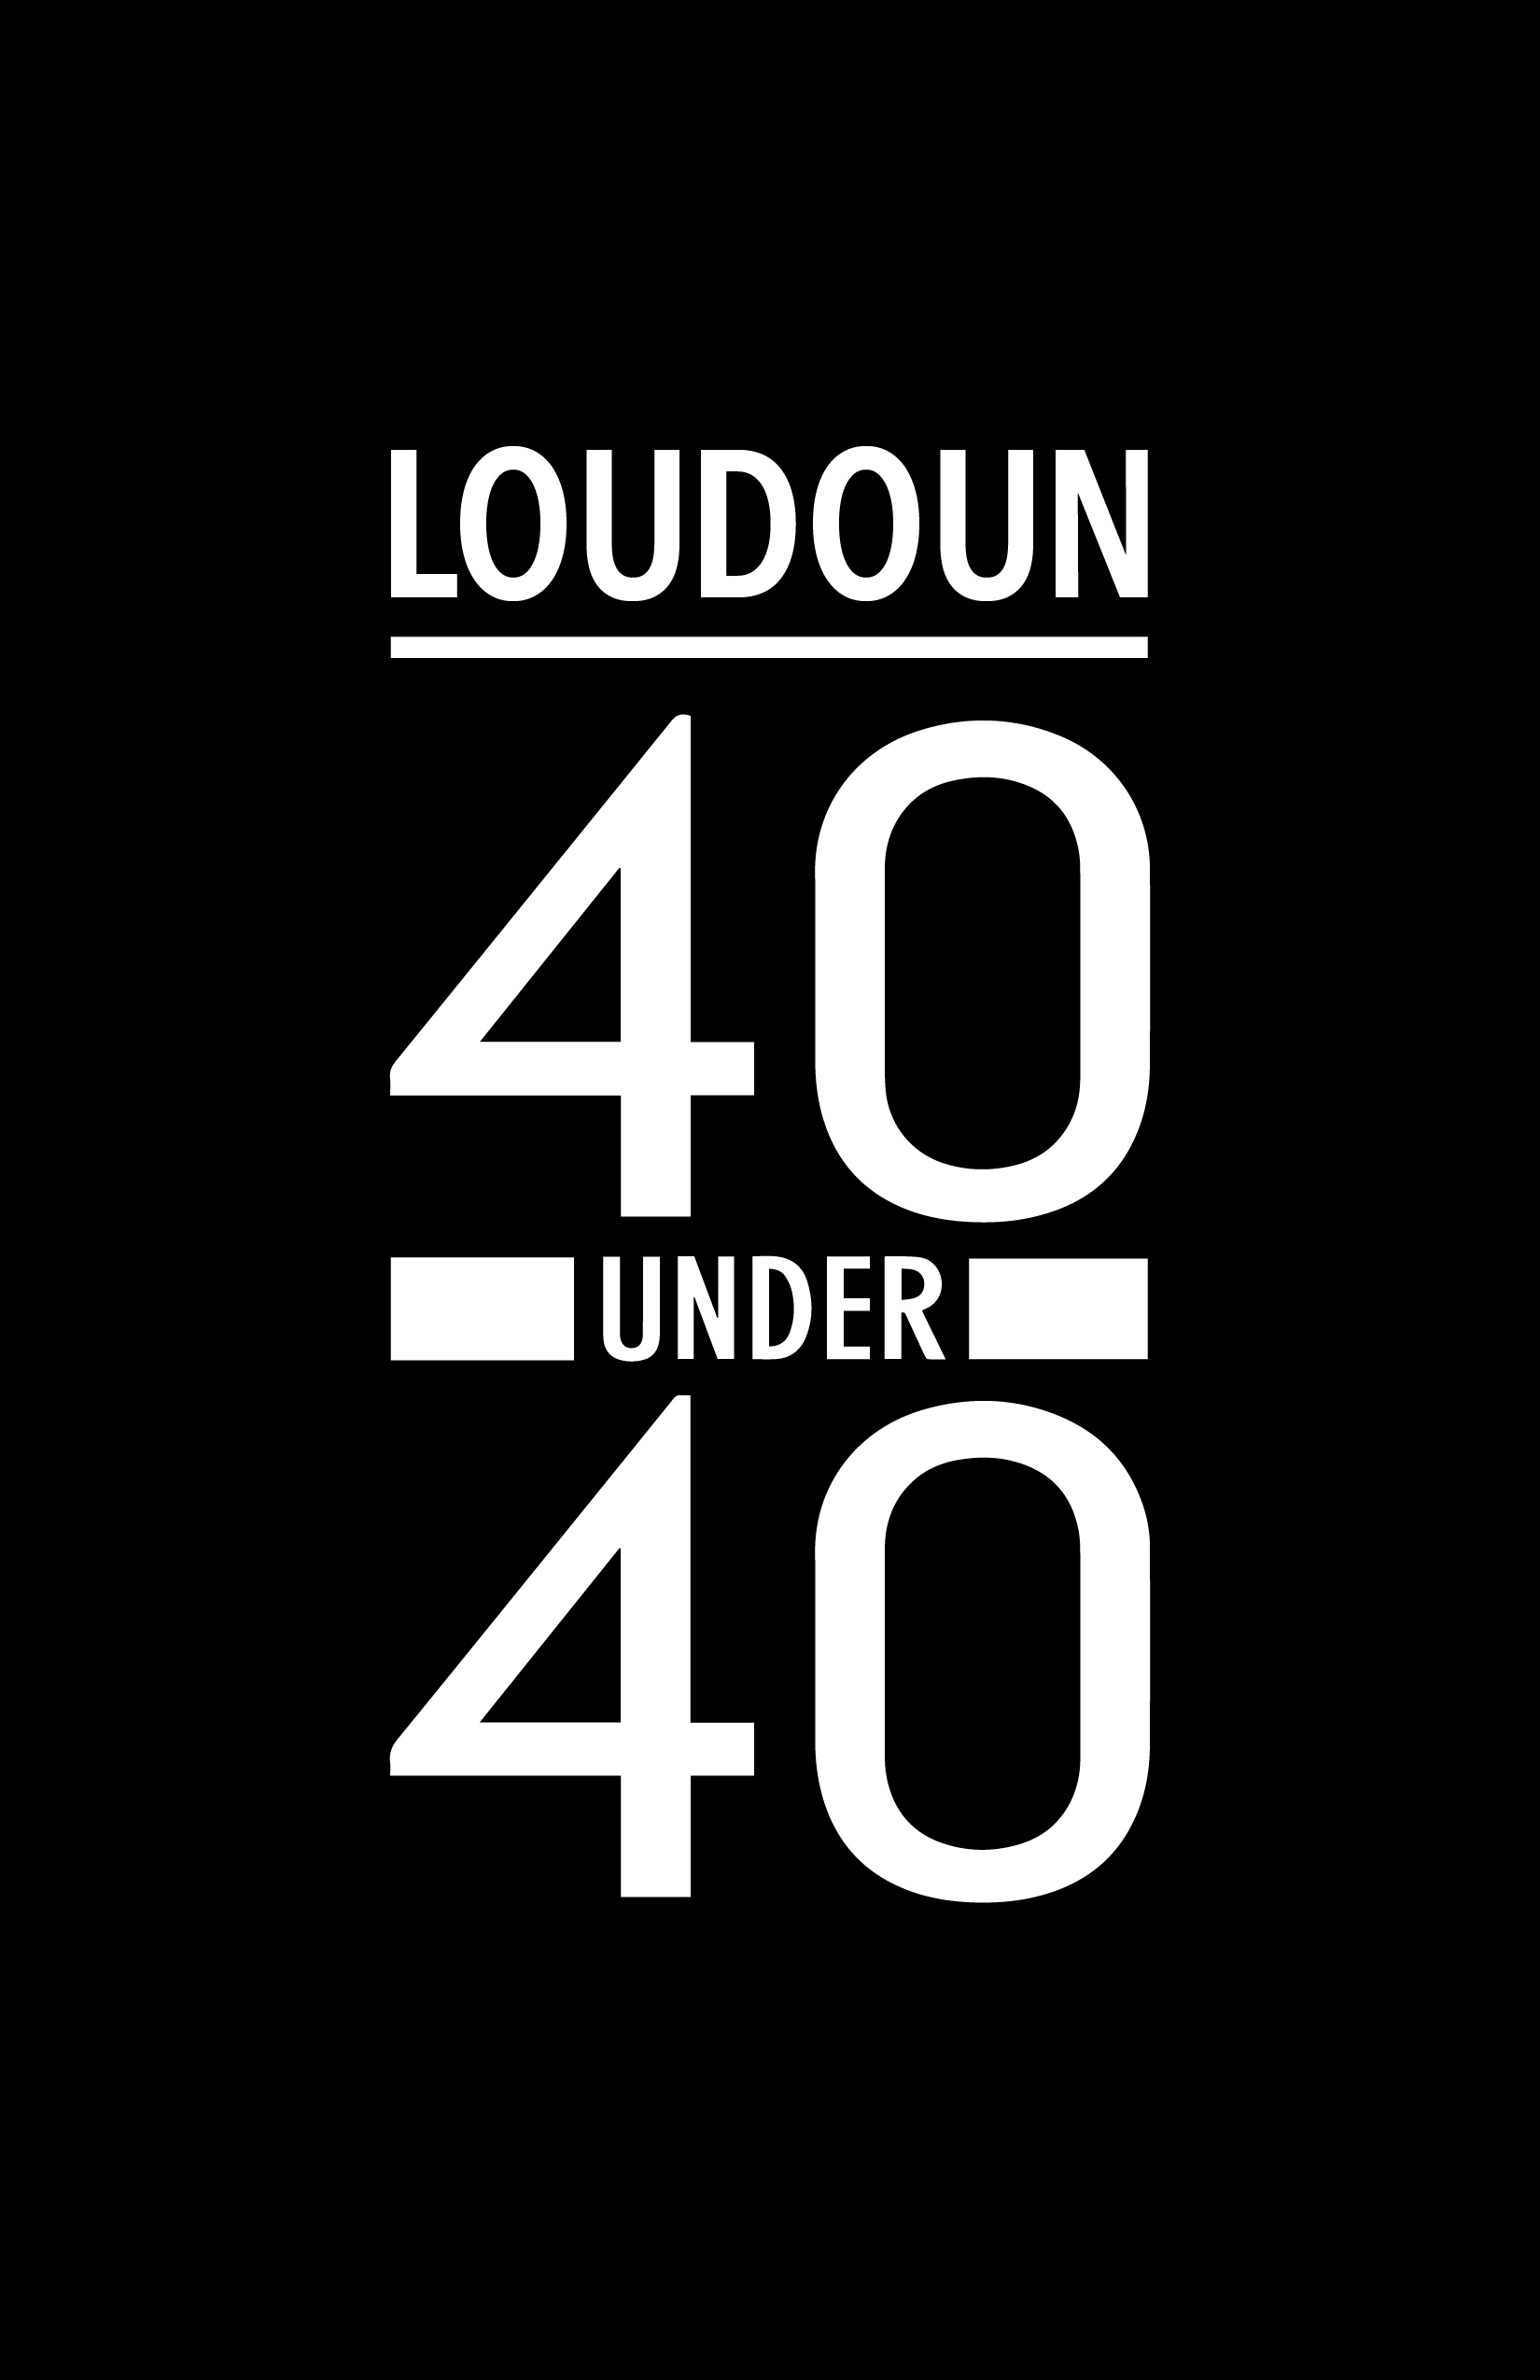 Loudoun 40 Under 40